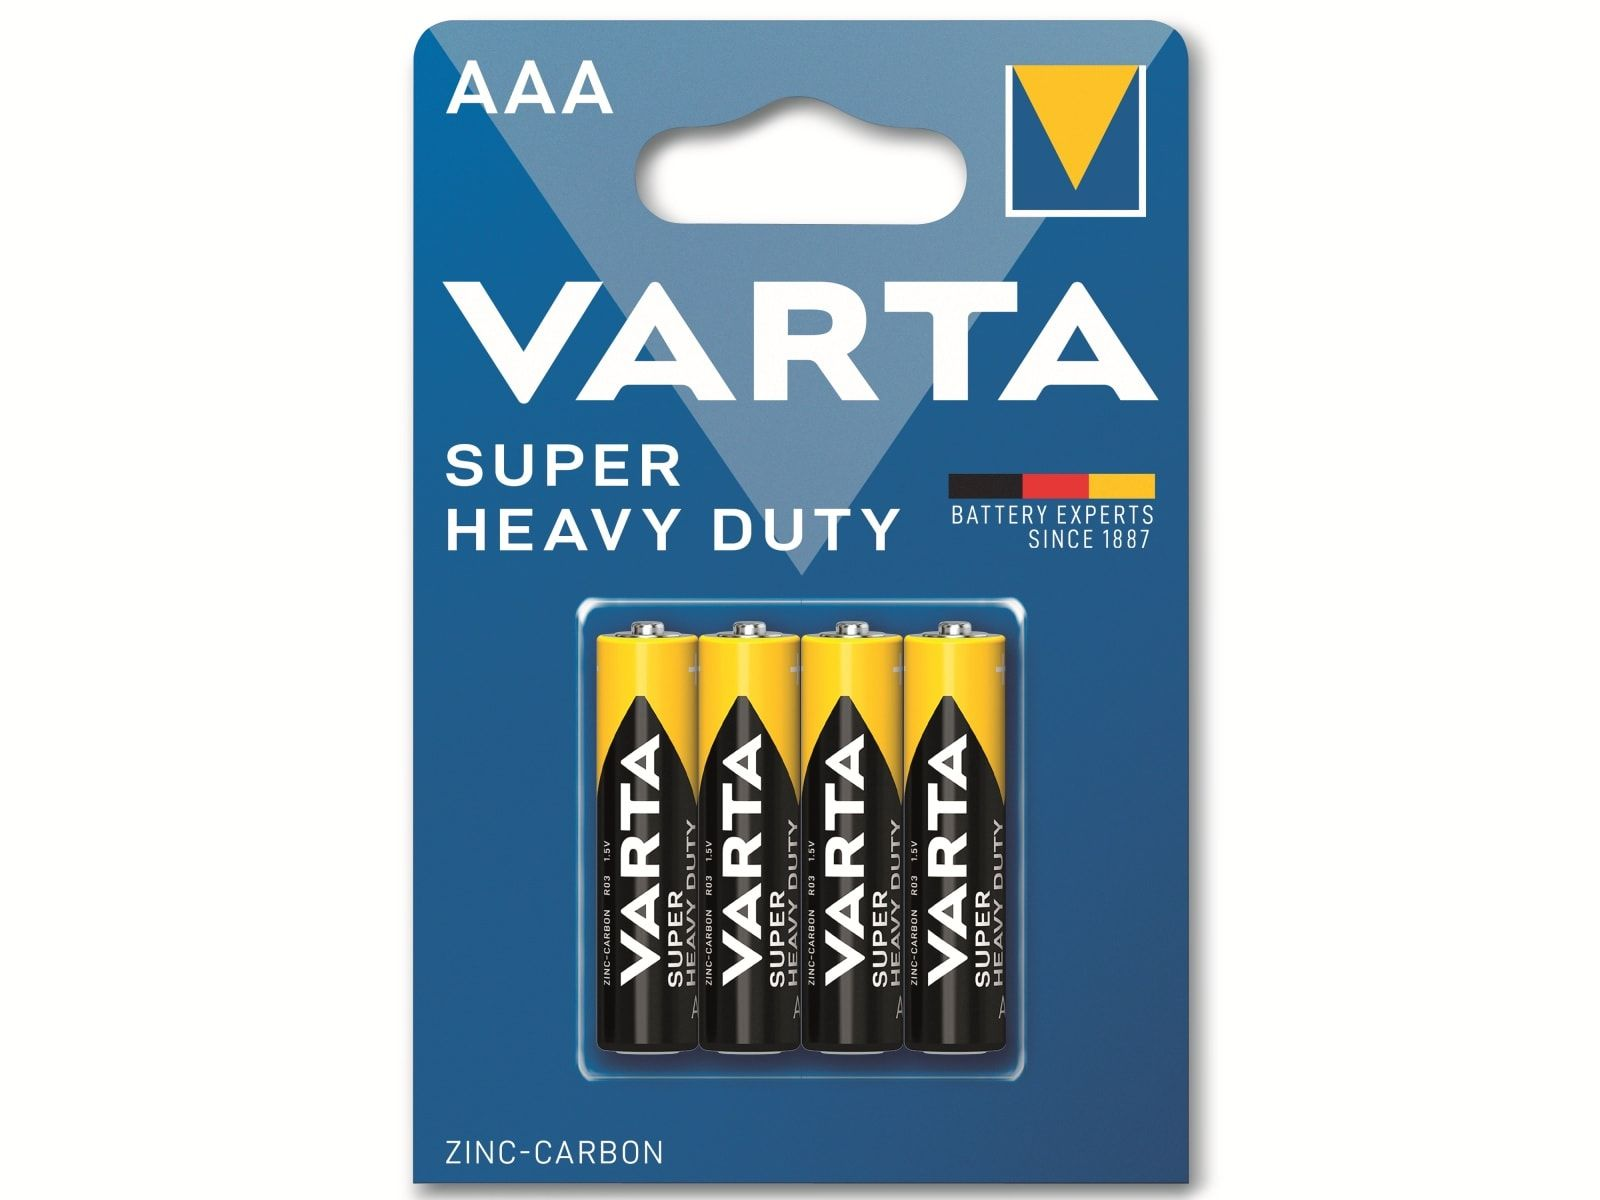 VARTA Batterie Stück Micro, 4 1.5V, Zink-Kohle, Zink-Kohle AAA, R03, Batterie Superlife